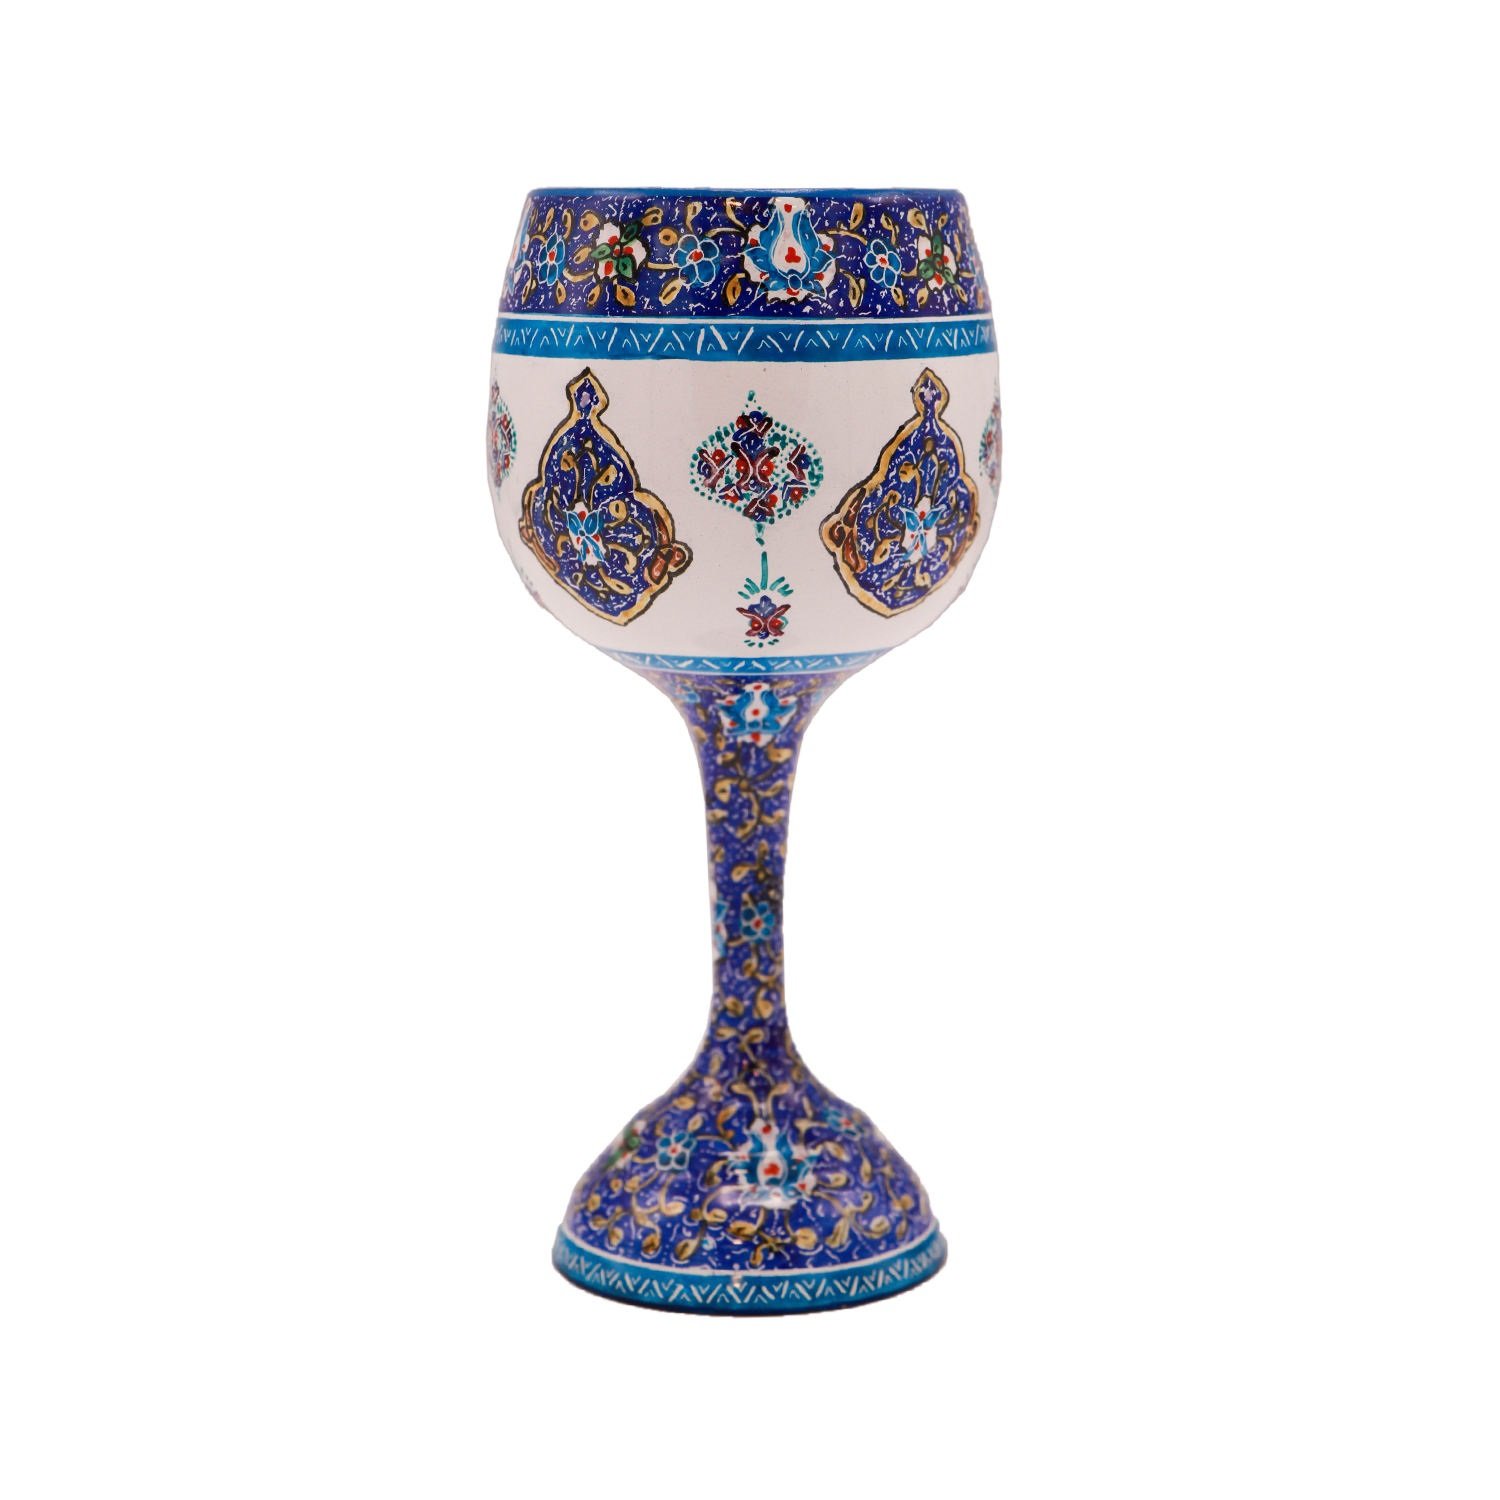 Enamel Handicraft copper pitcher and cup design eslimi toranj code 485 collection 7 pcs,buy enamels,buy blue enamel,buy traditional enamel